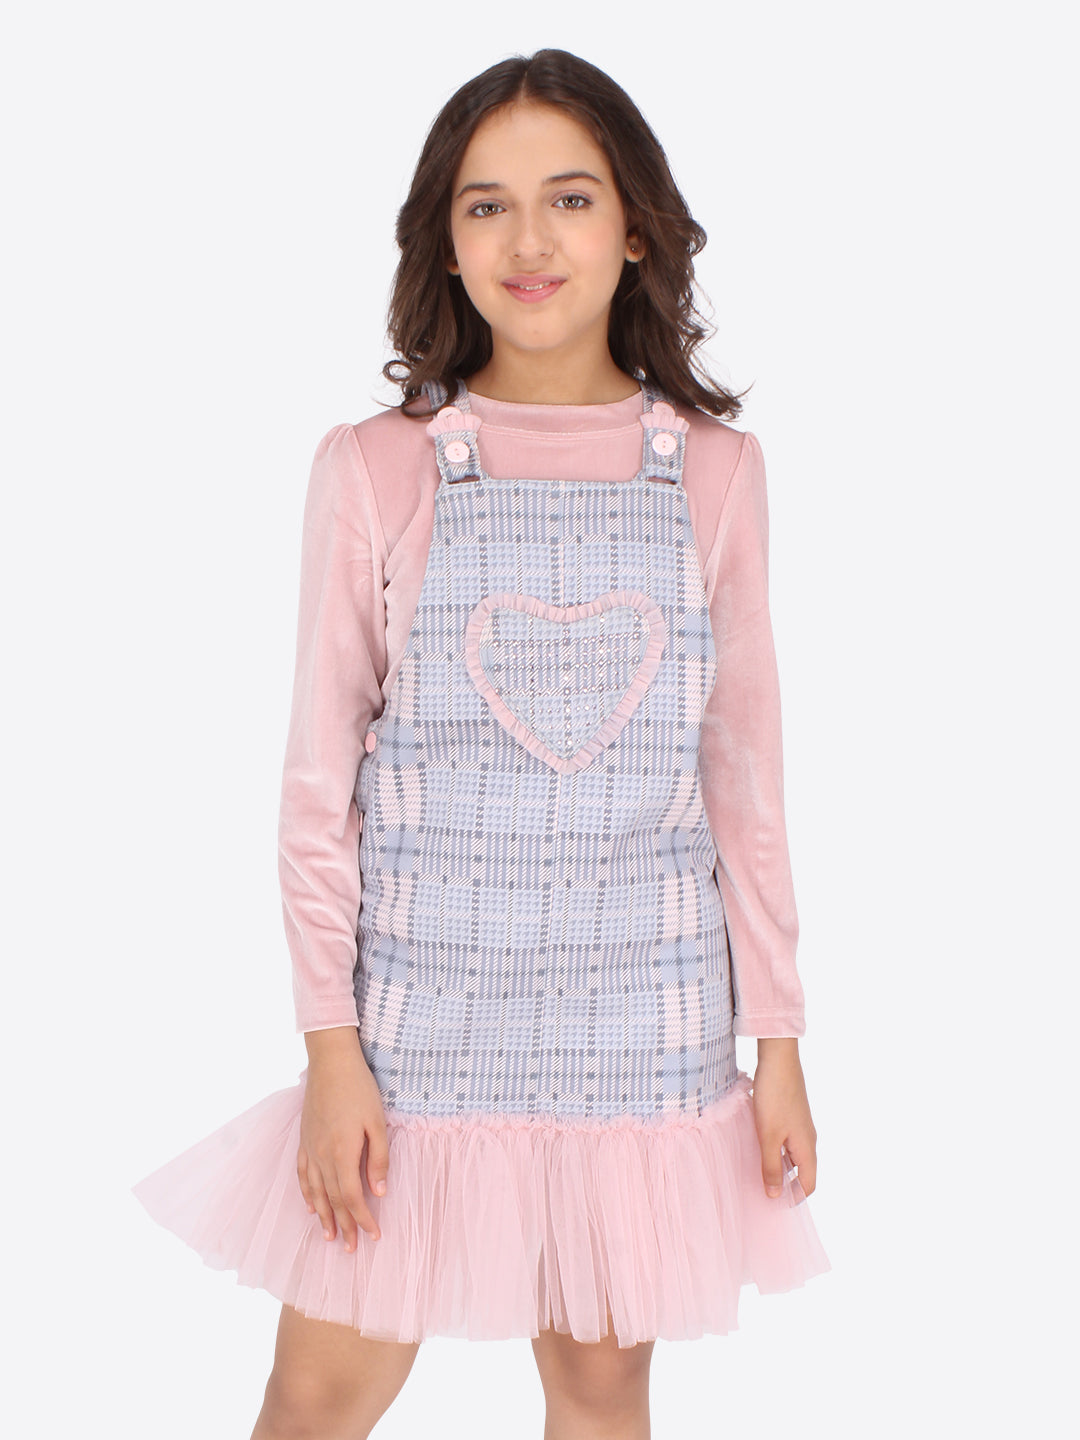 Baby Girls Midi/Knee Length Casual Dress  (Pink, Full Sleeve)